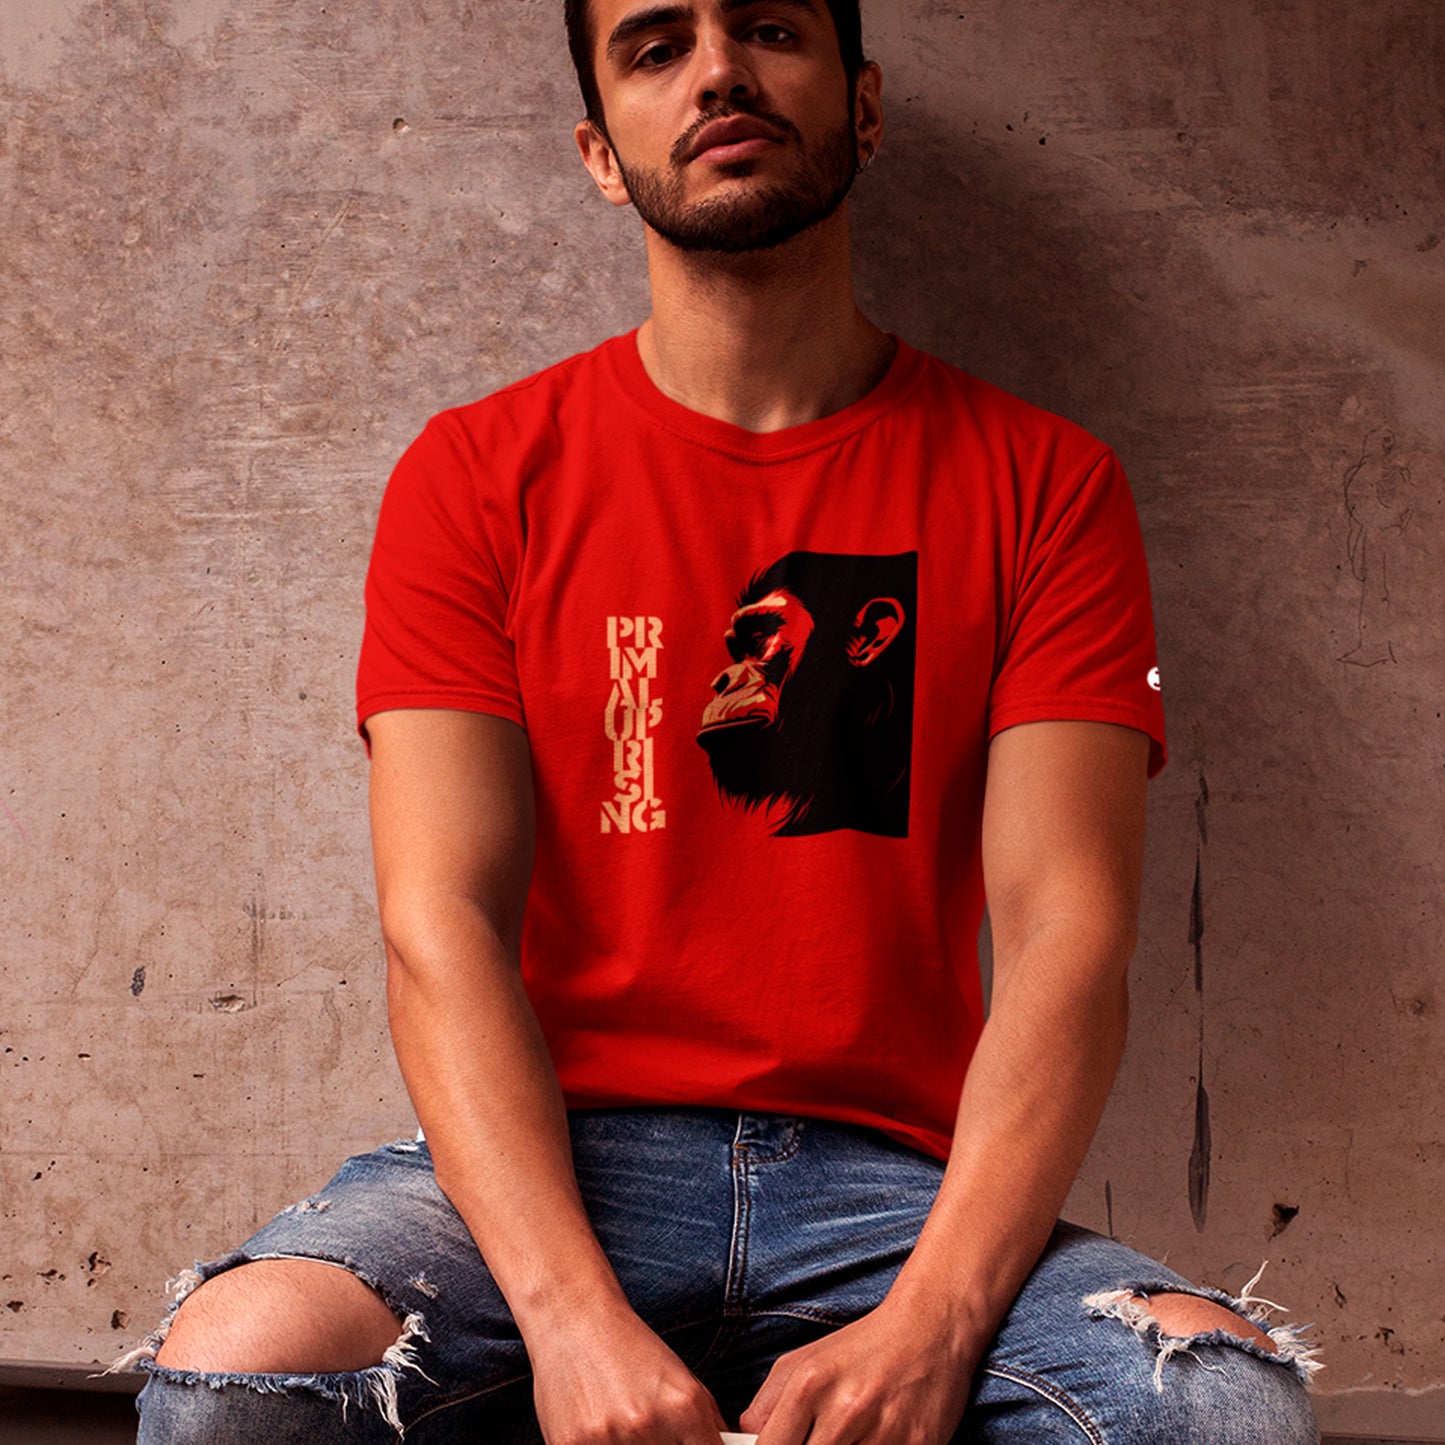 Red Primal Uprising Unisex organic cotton t-shirt worn by model